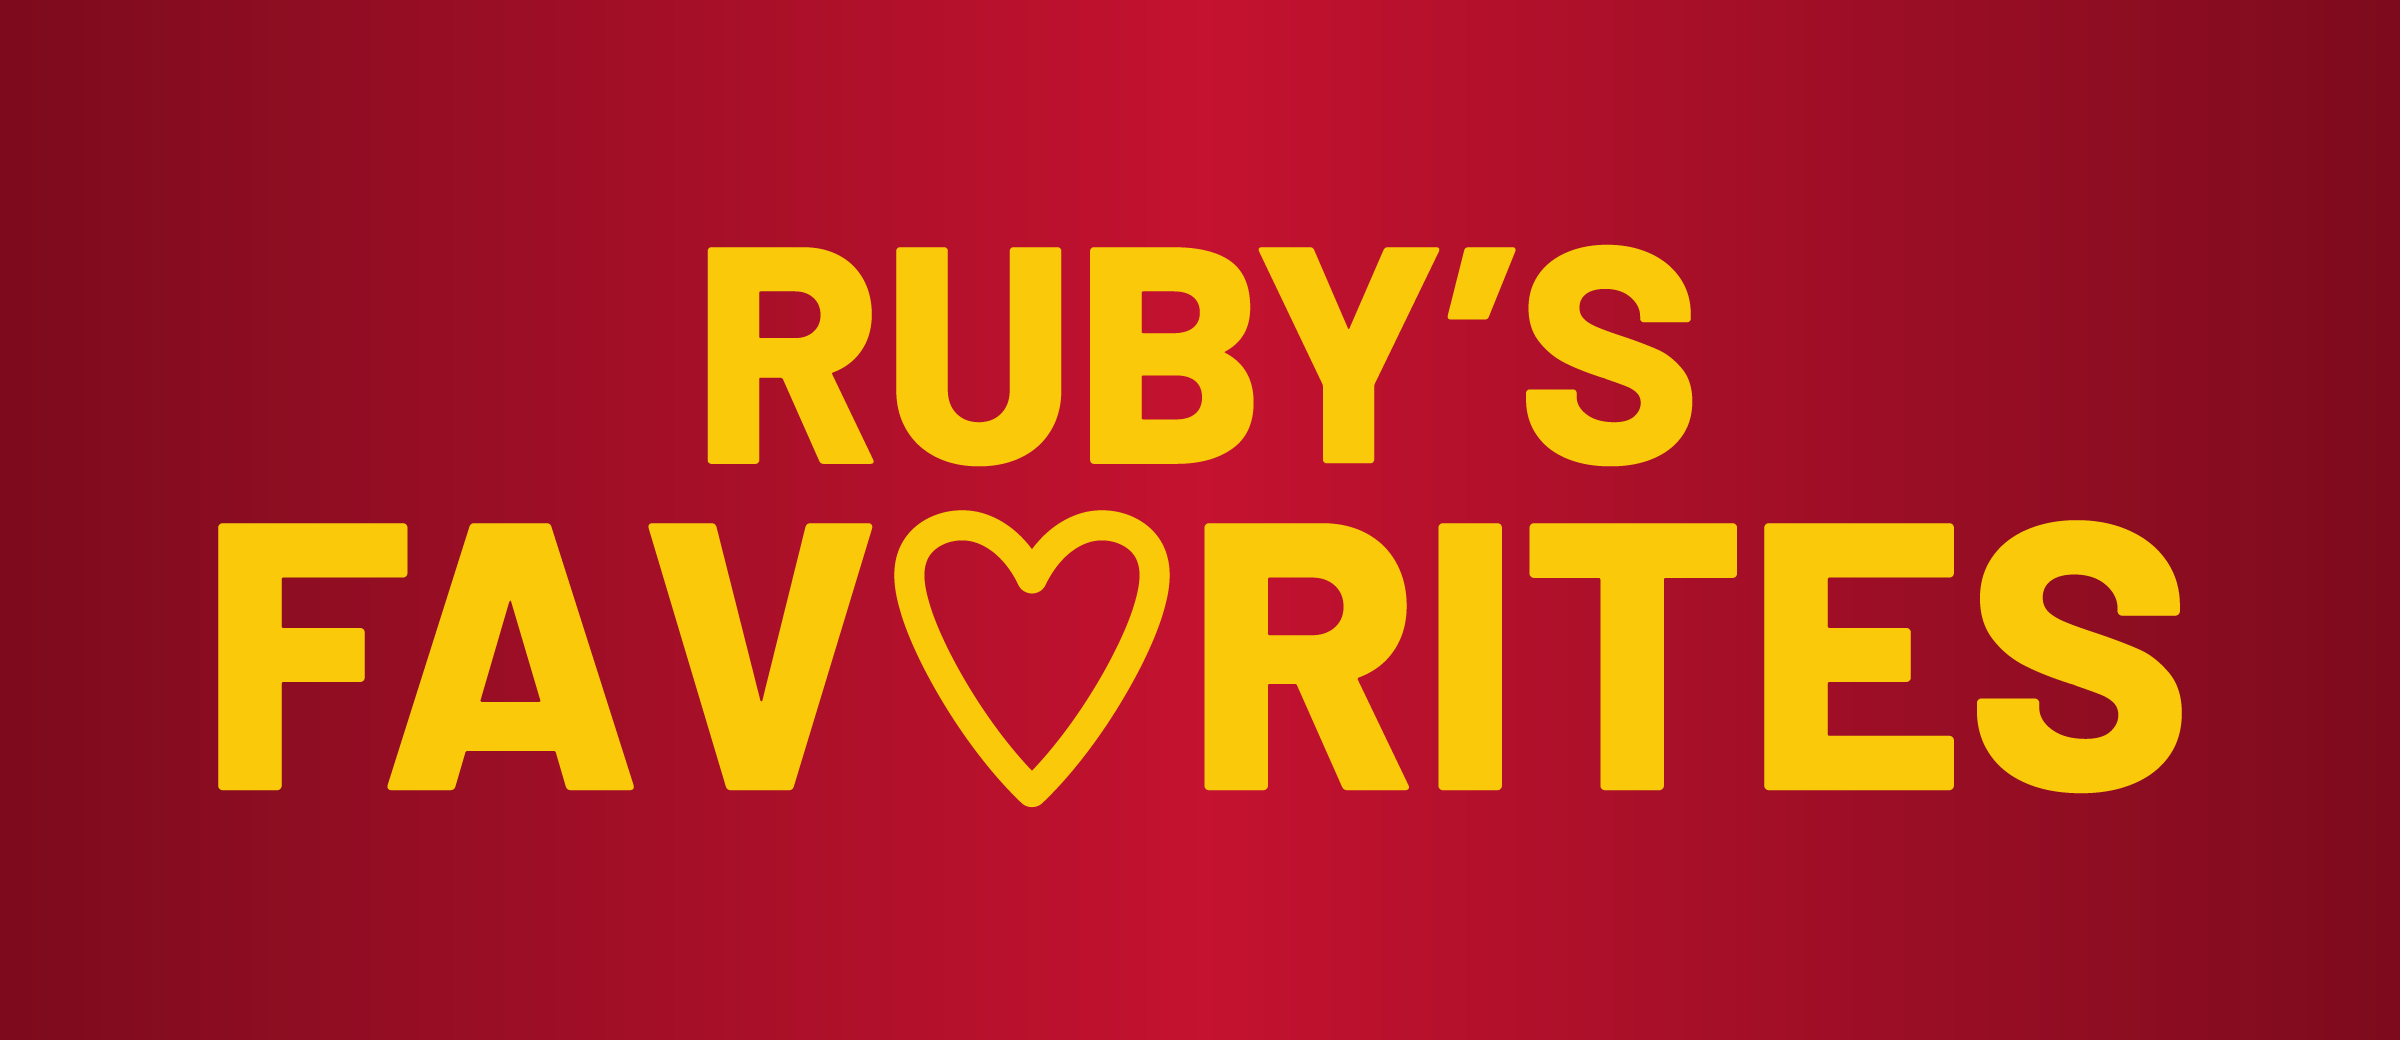 RUBY’S FAVORITES